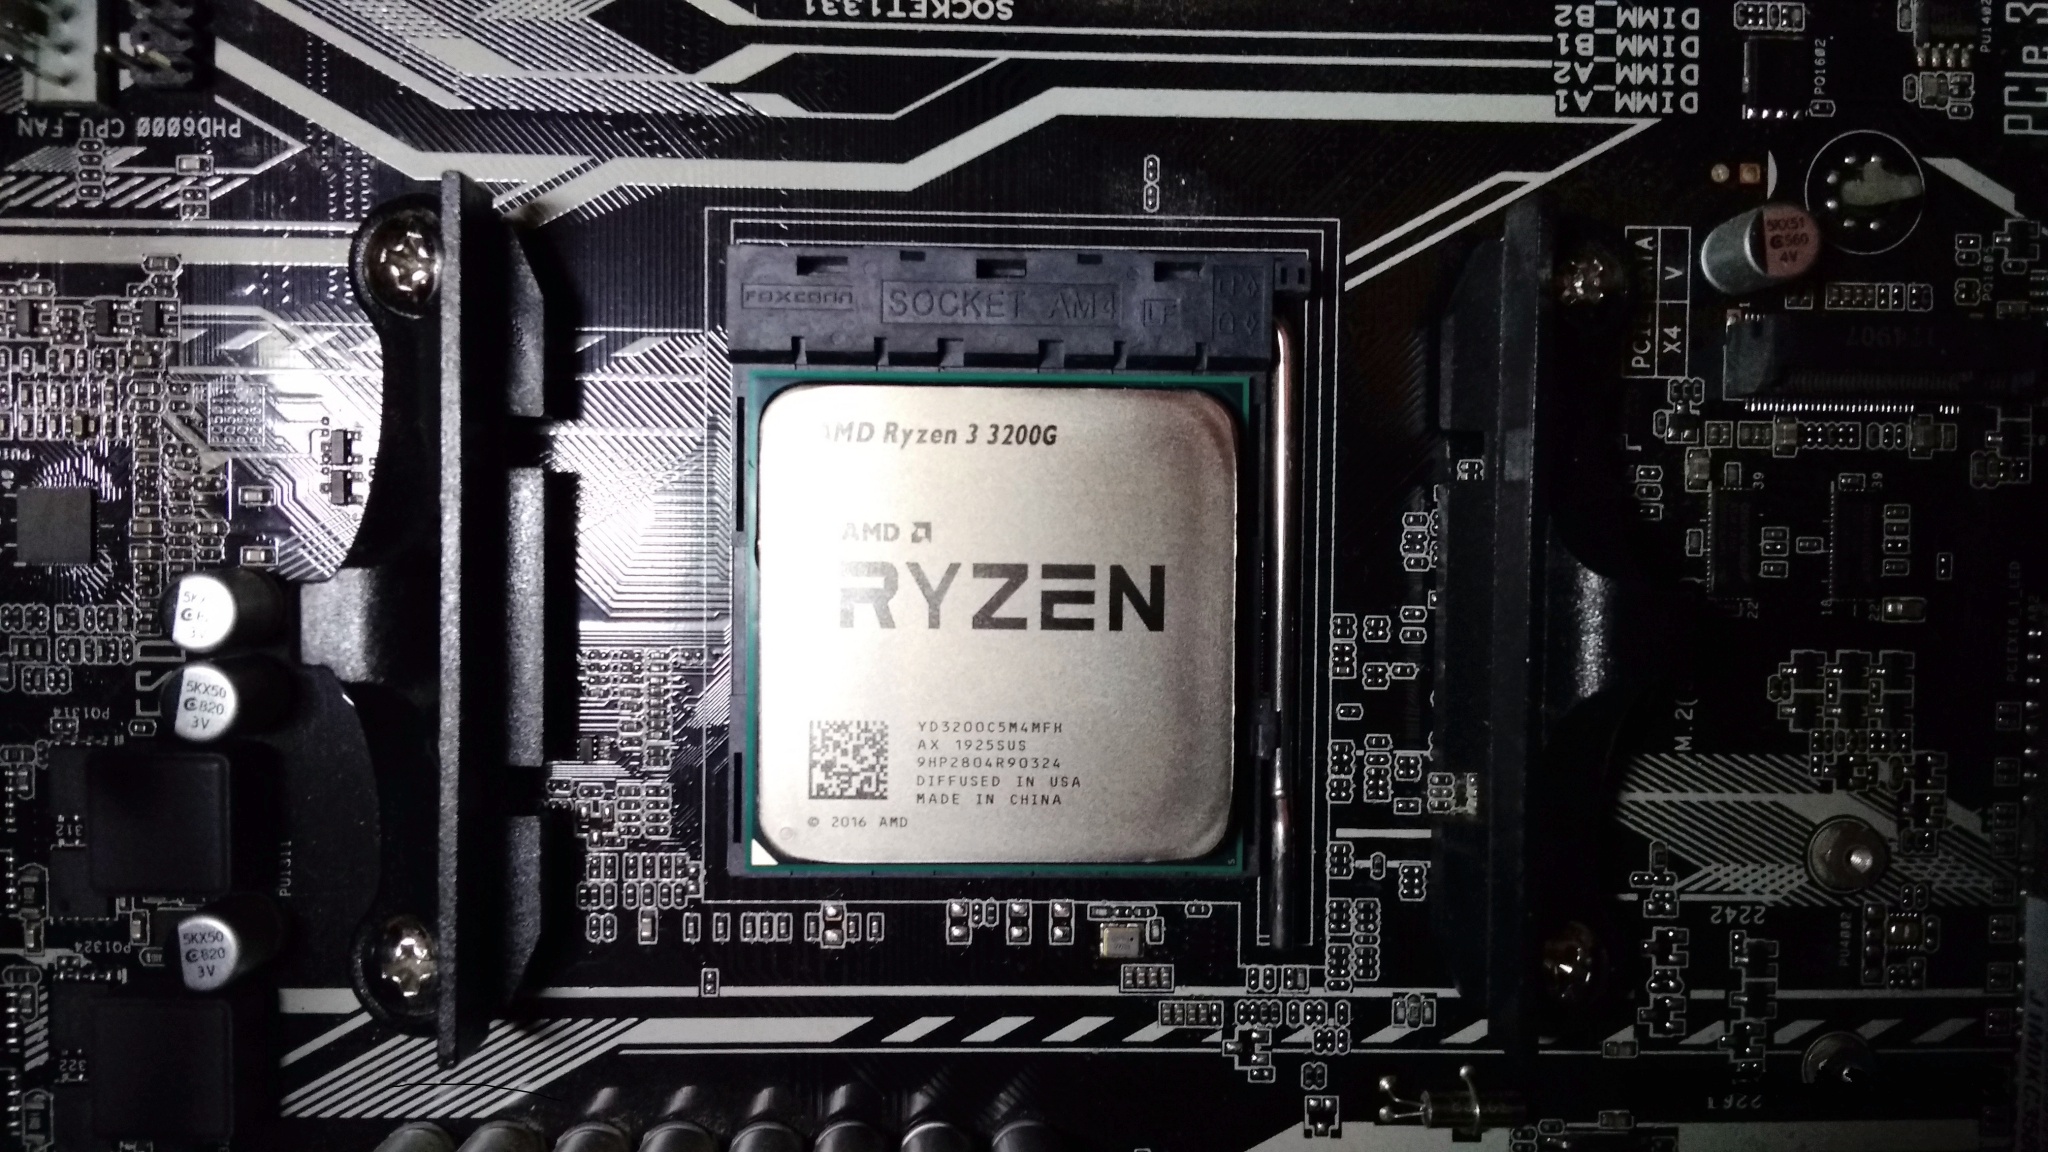 3 pro 3200g. Процессор AMD Ryzen 3 3200g am4. Ryzen 3 Pro 3200g процессор. AMD Ryzen 3 Pro 1200. Процессор <am4> Ryzen 3 3200g Box.